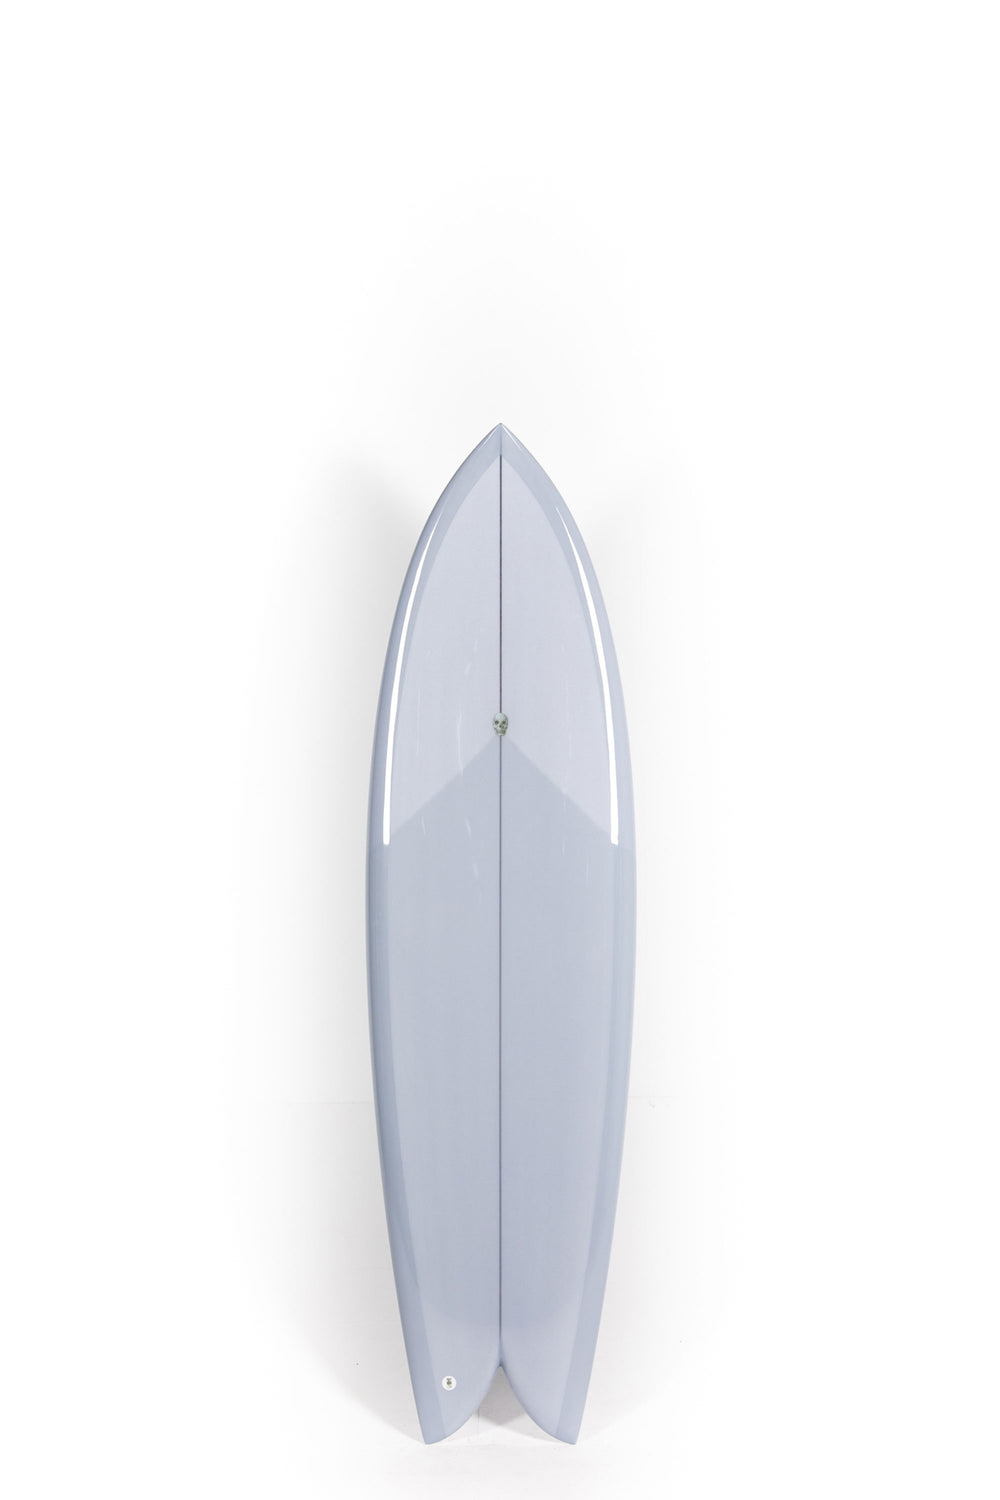 Pukas Surf Shop - Christenson Surfboards - LONG PHISH - 6'4